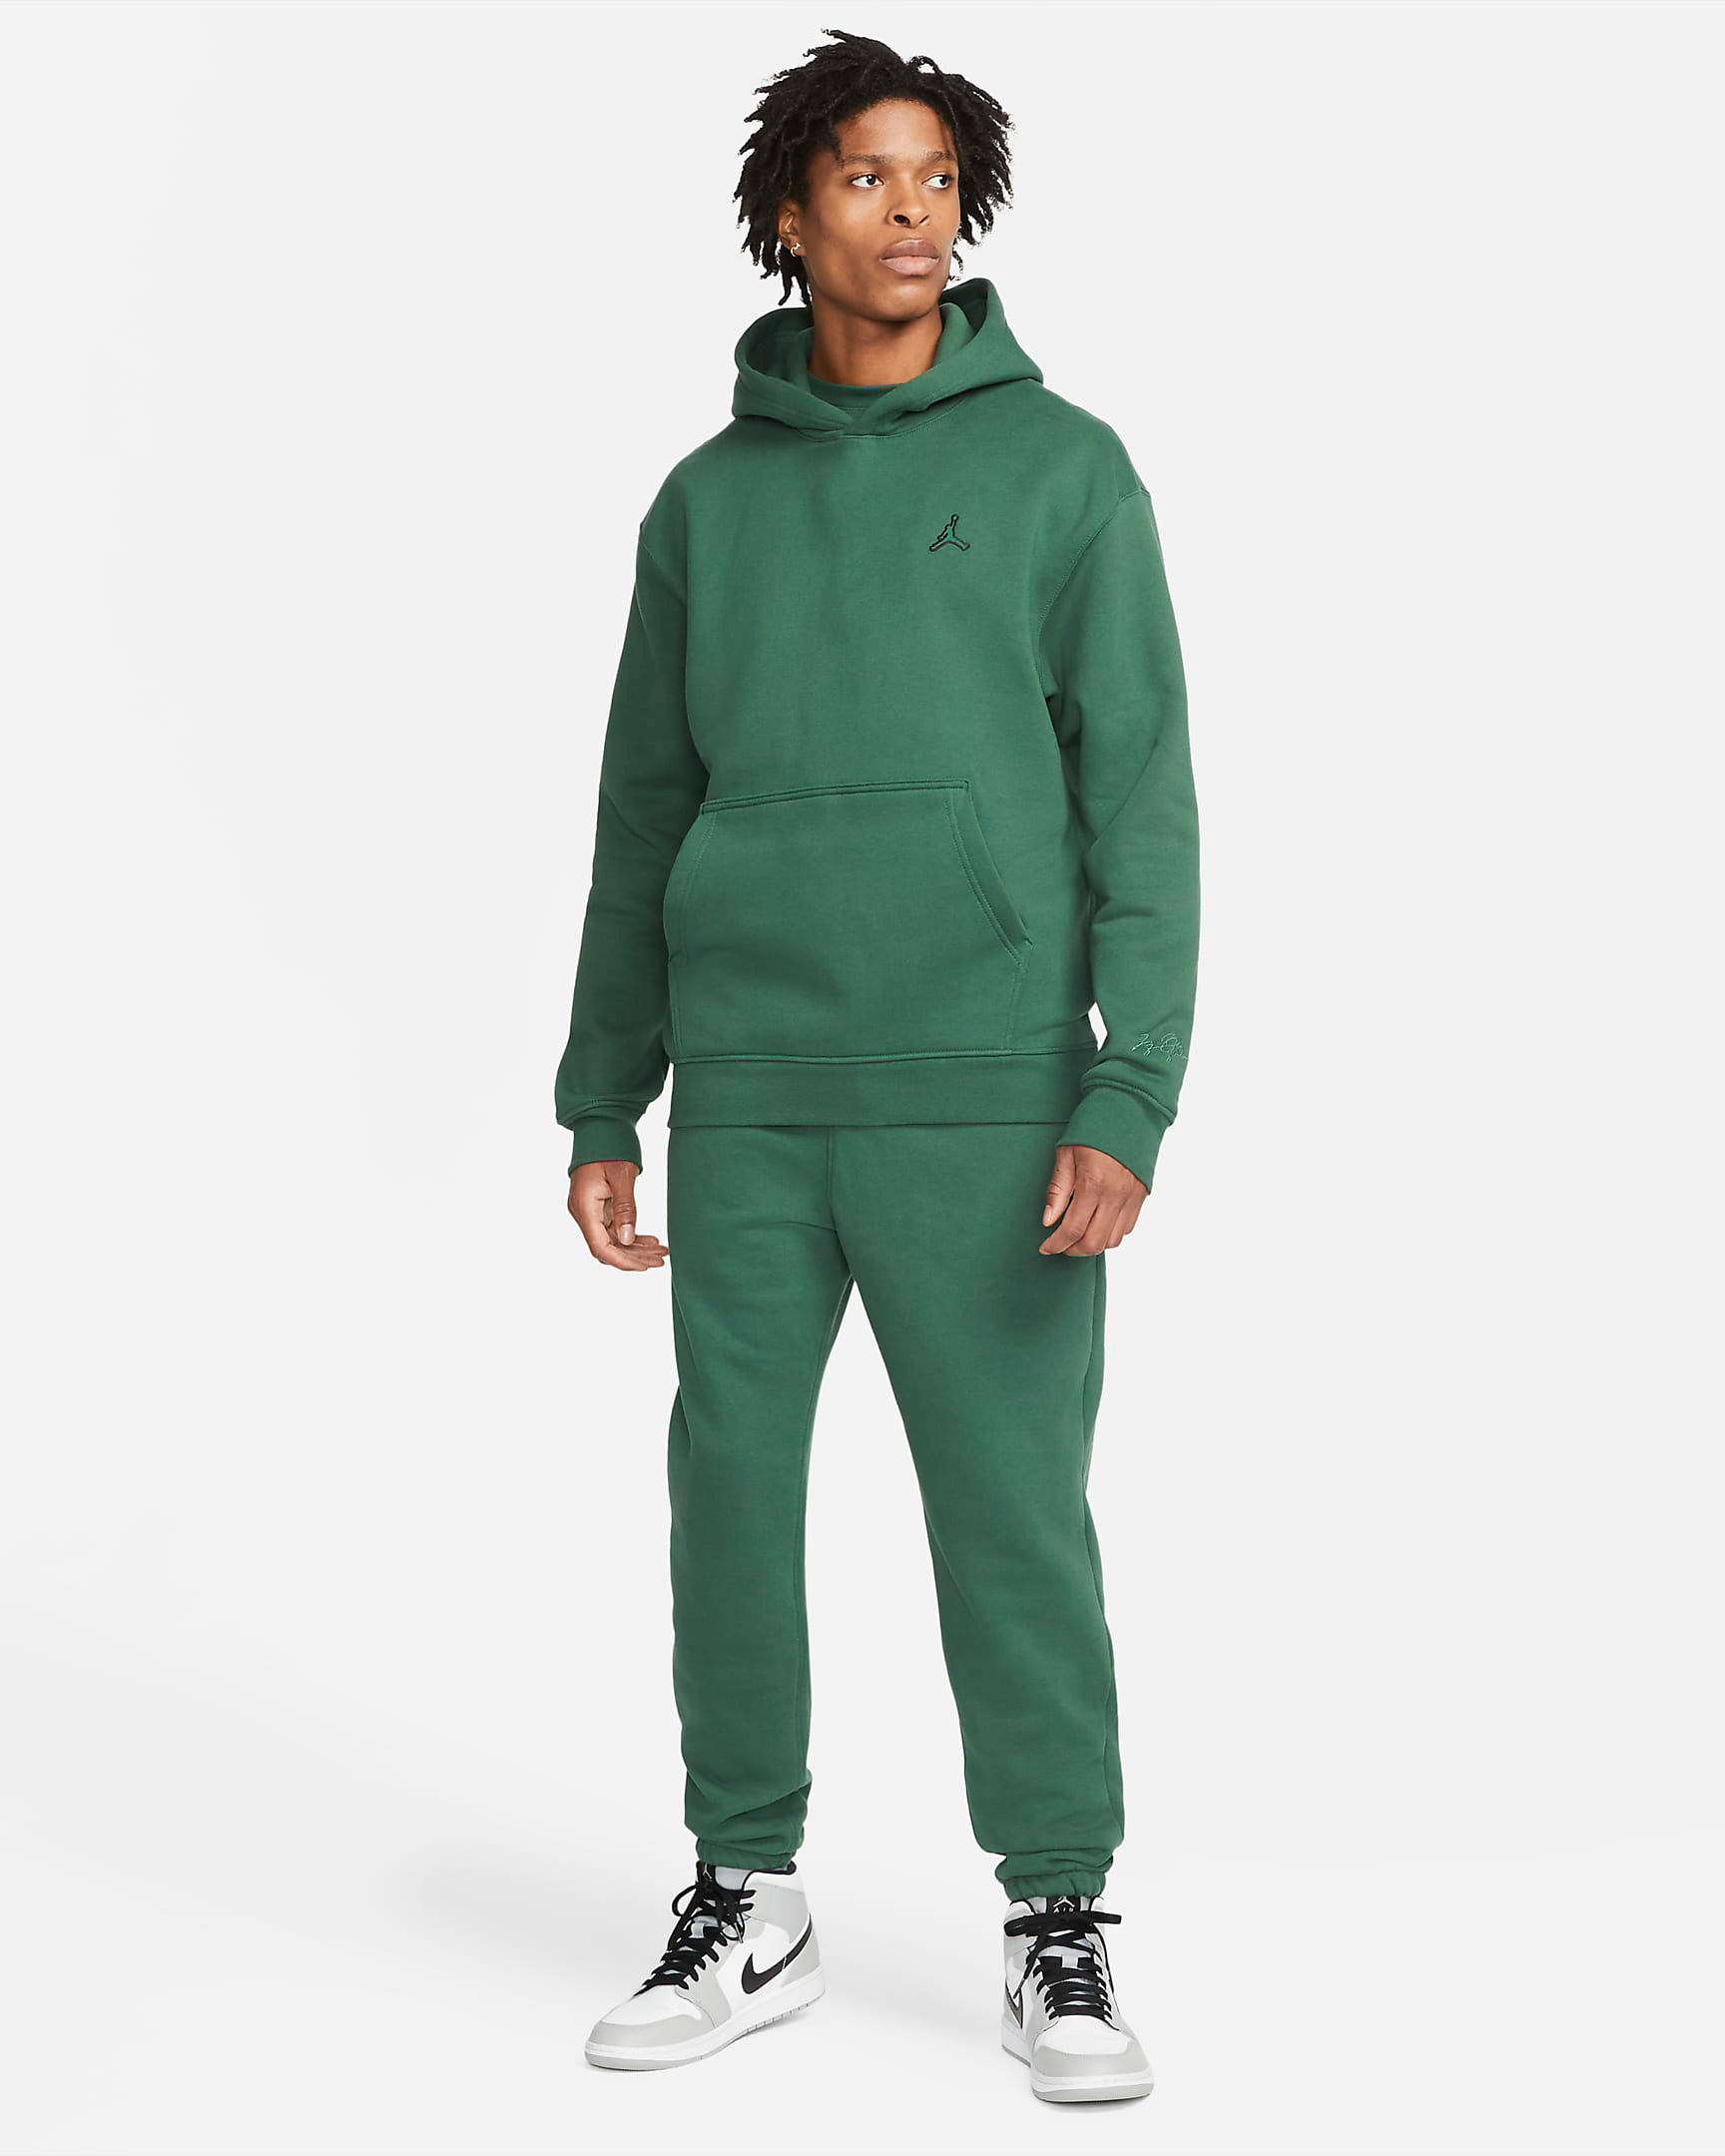 jordan-noble-green-essentials-pullover-hoodie-pants-outfit